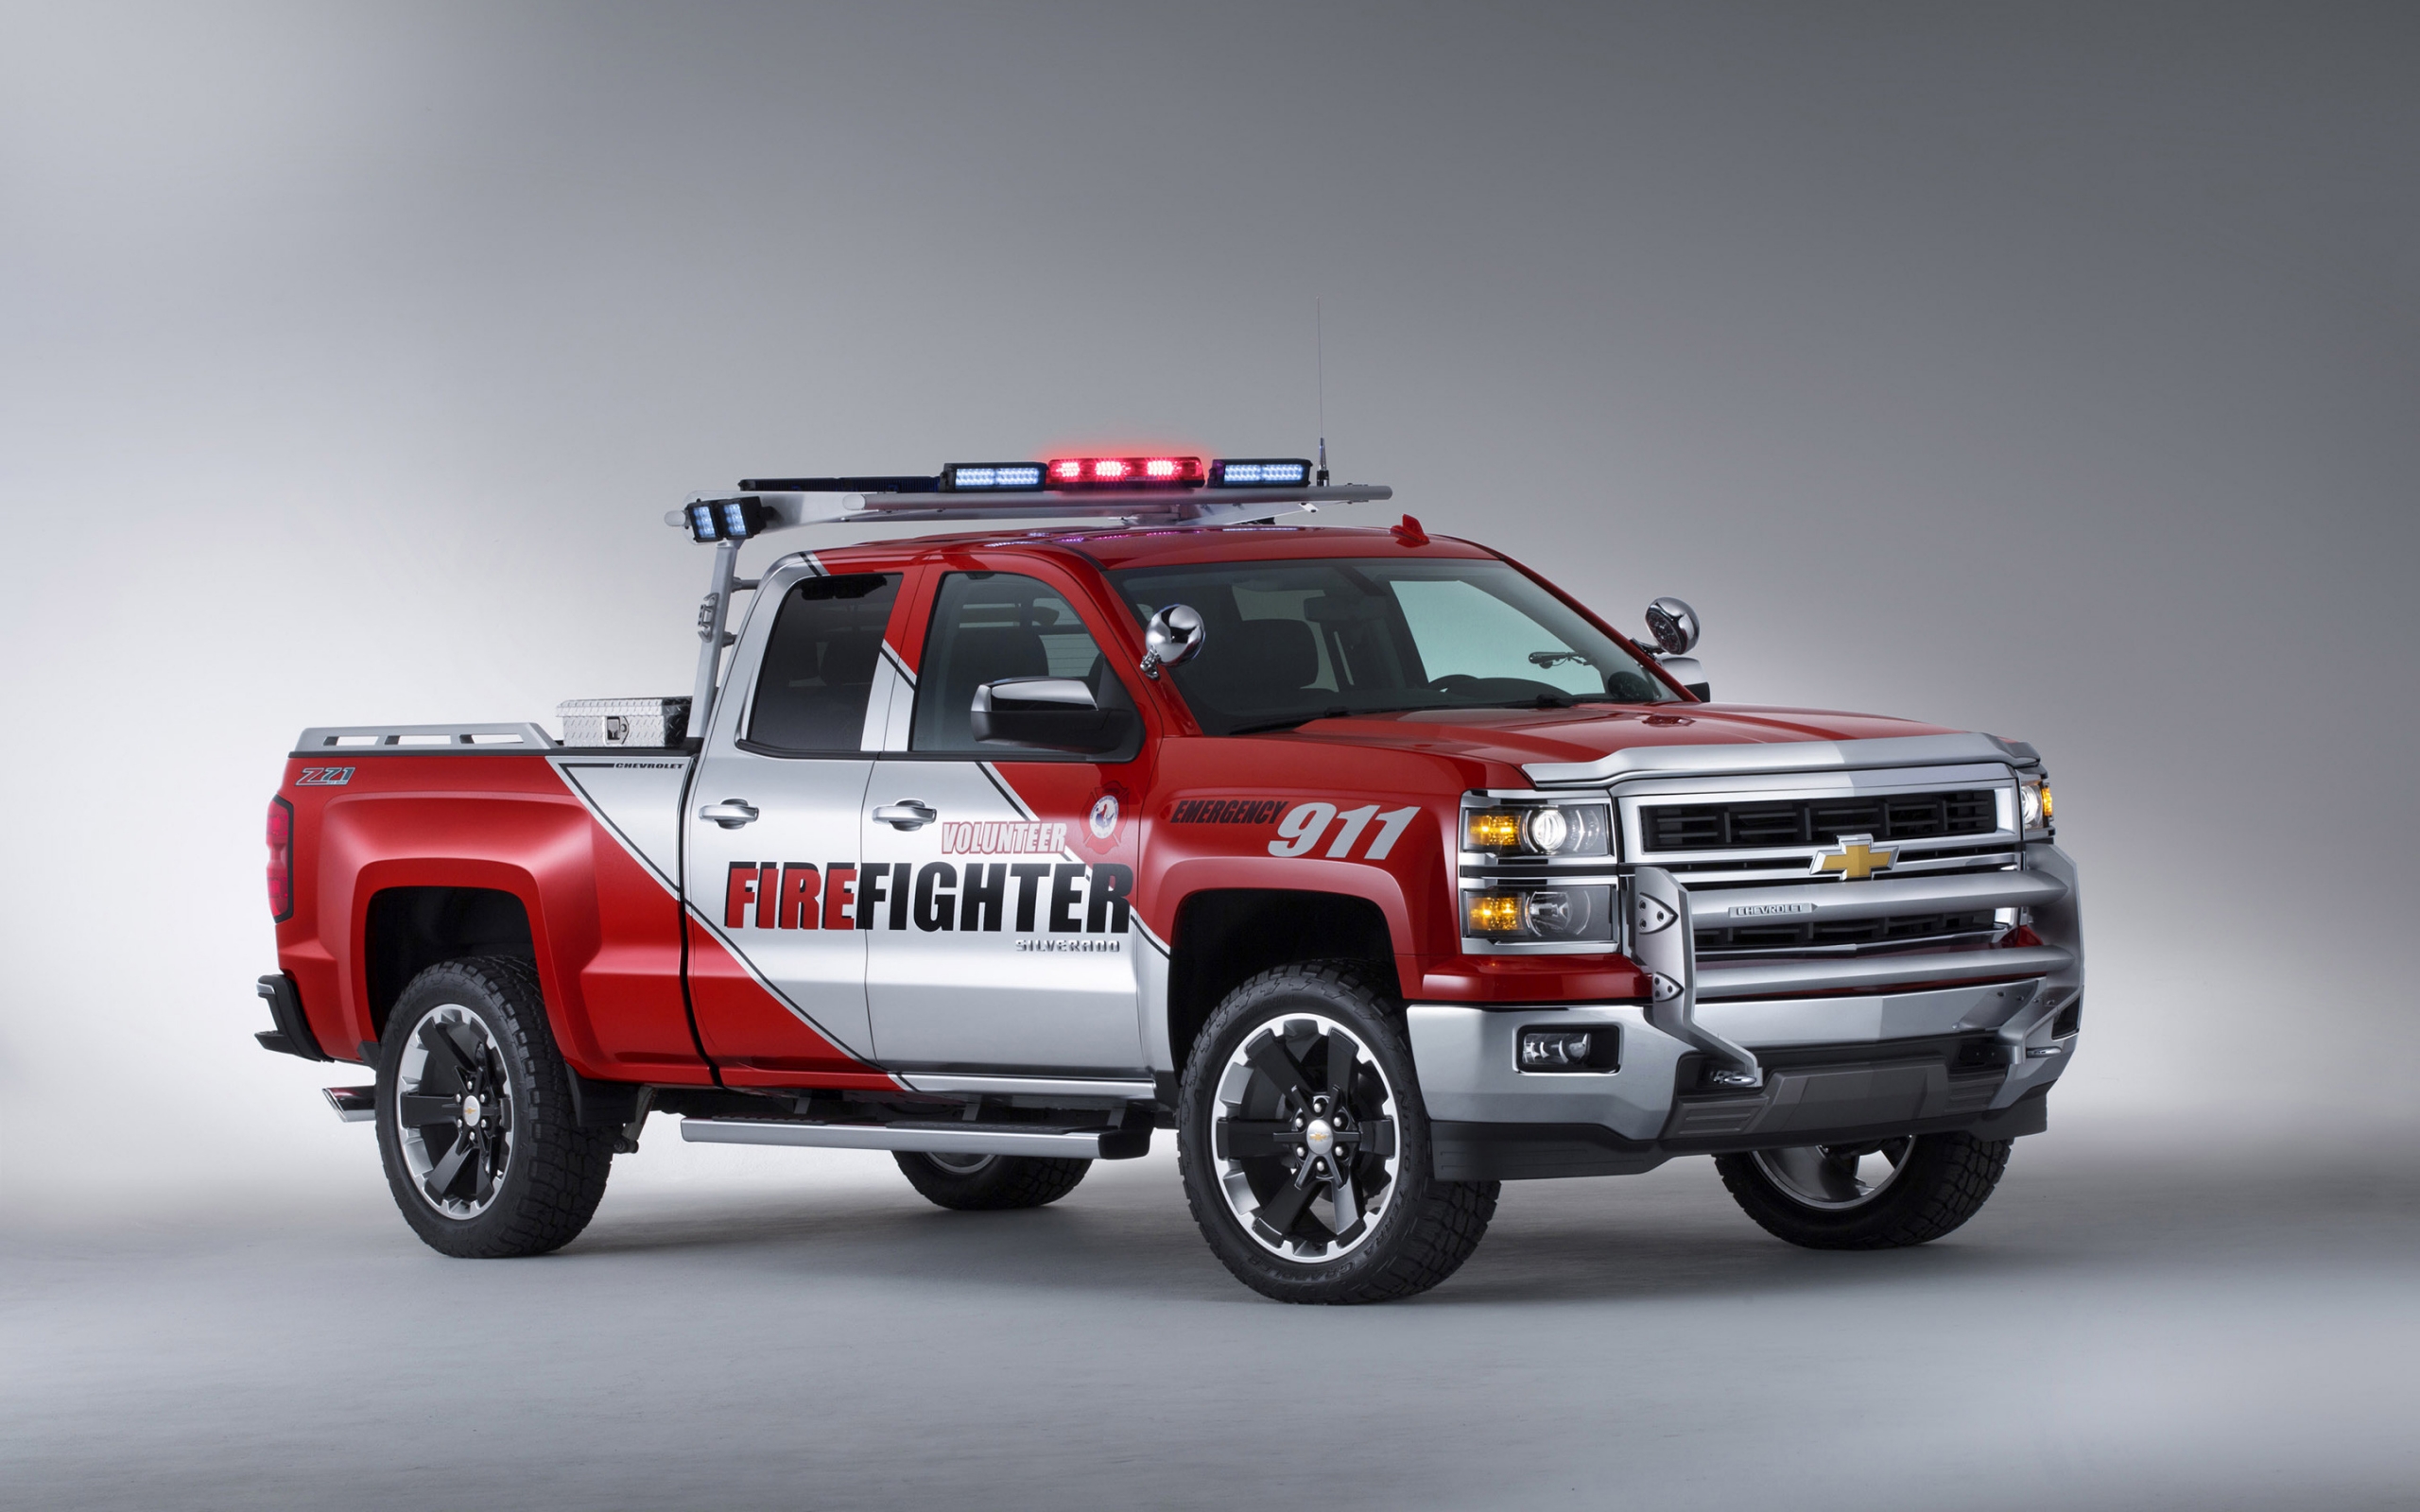 Chevrolet Silverado Volunteer Firefighters Concept for 2560 x 1600 widescreen resolution